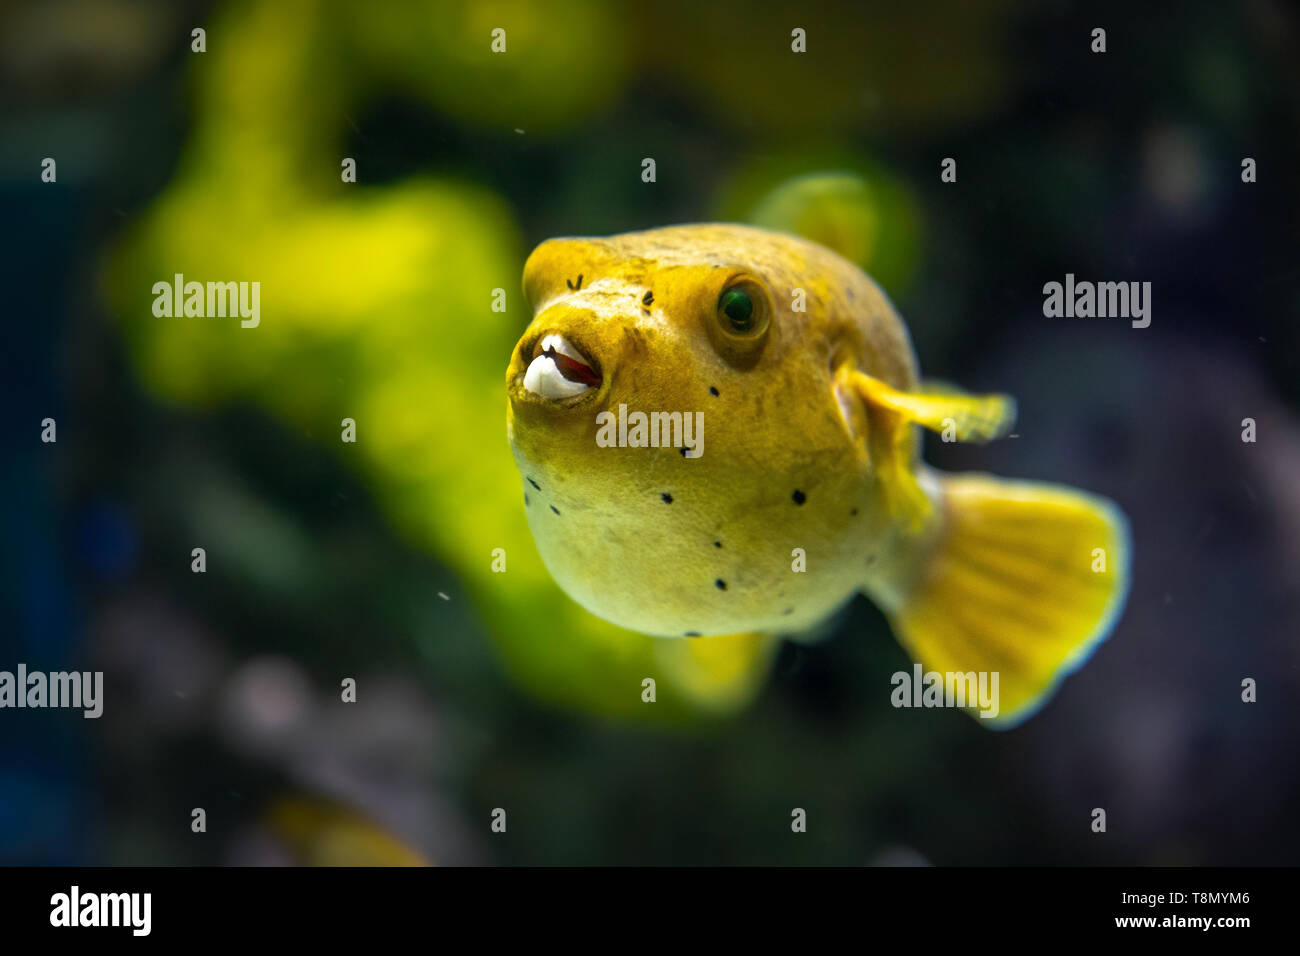 Yellow Blackspotted (or Dog Faced) Puffer  fish (Arothron nigropunctatus) swimming in Aquarium tank Stock Photo